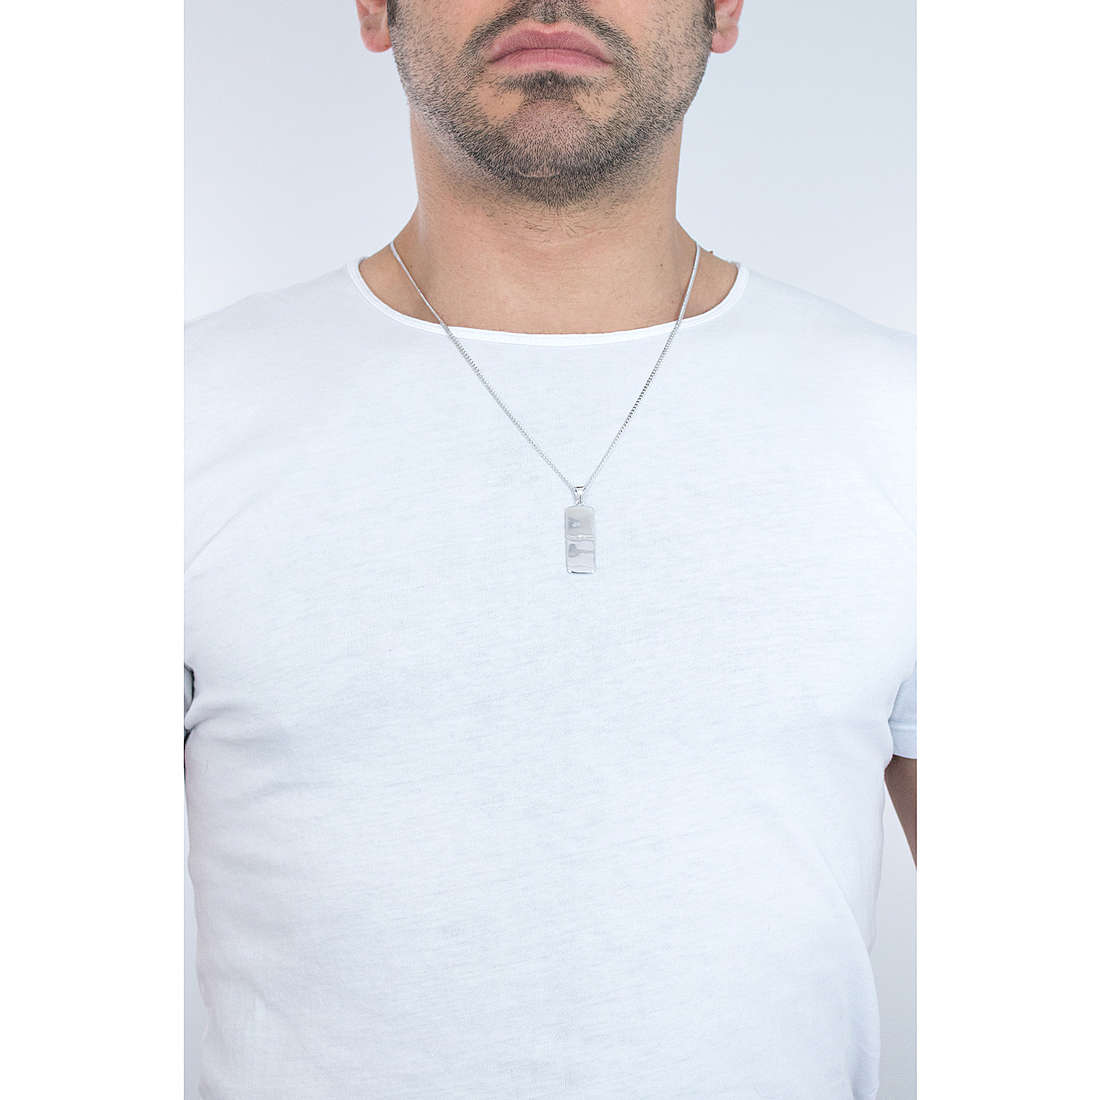 Cesare Paciotti necklaces man JPCL1374B wearing